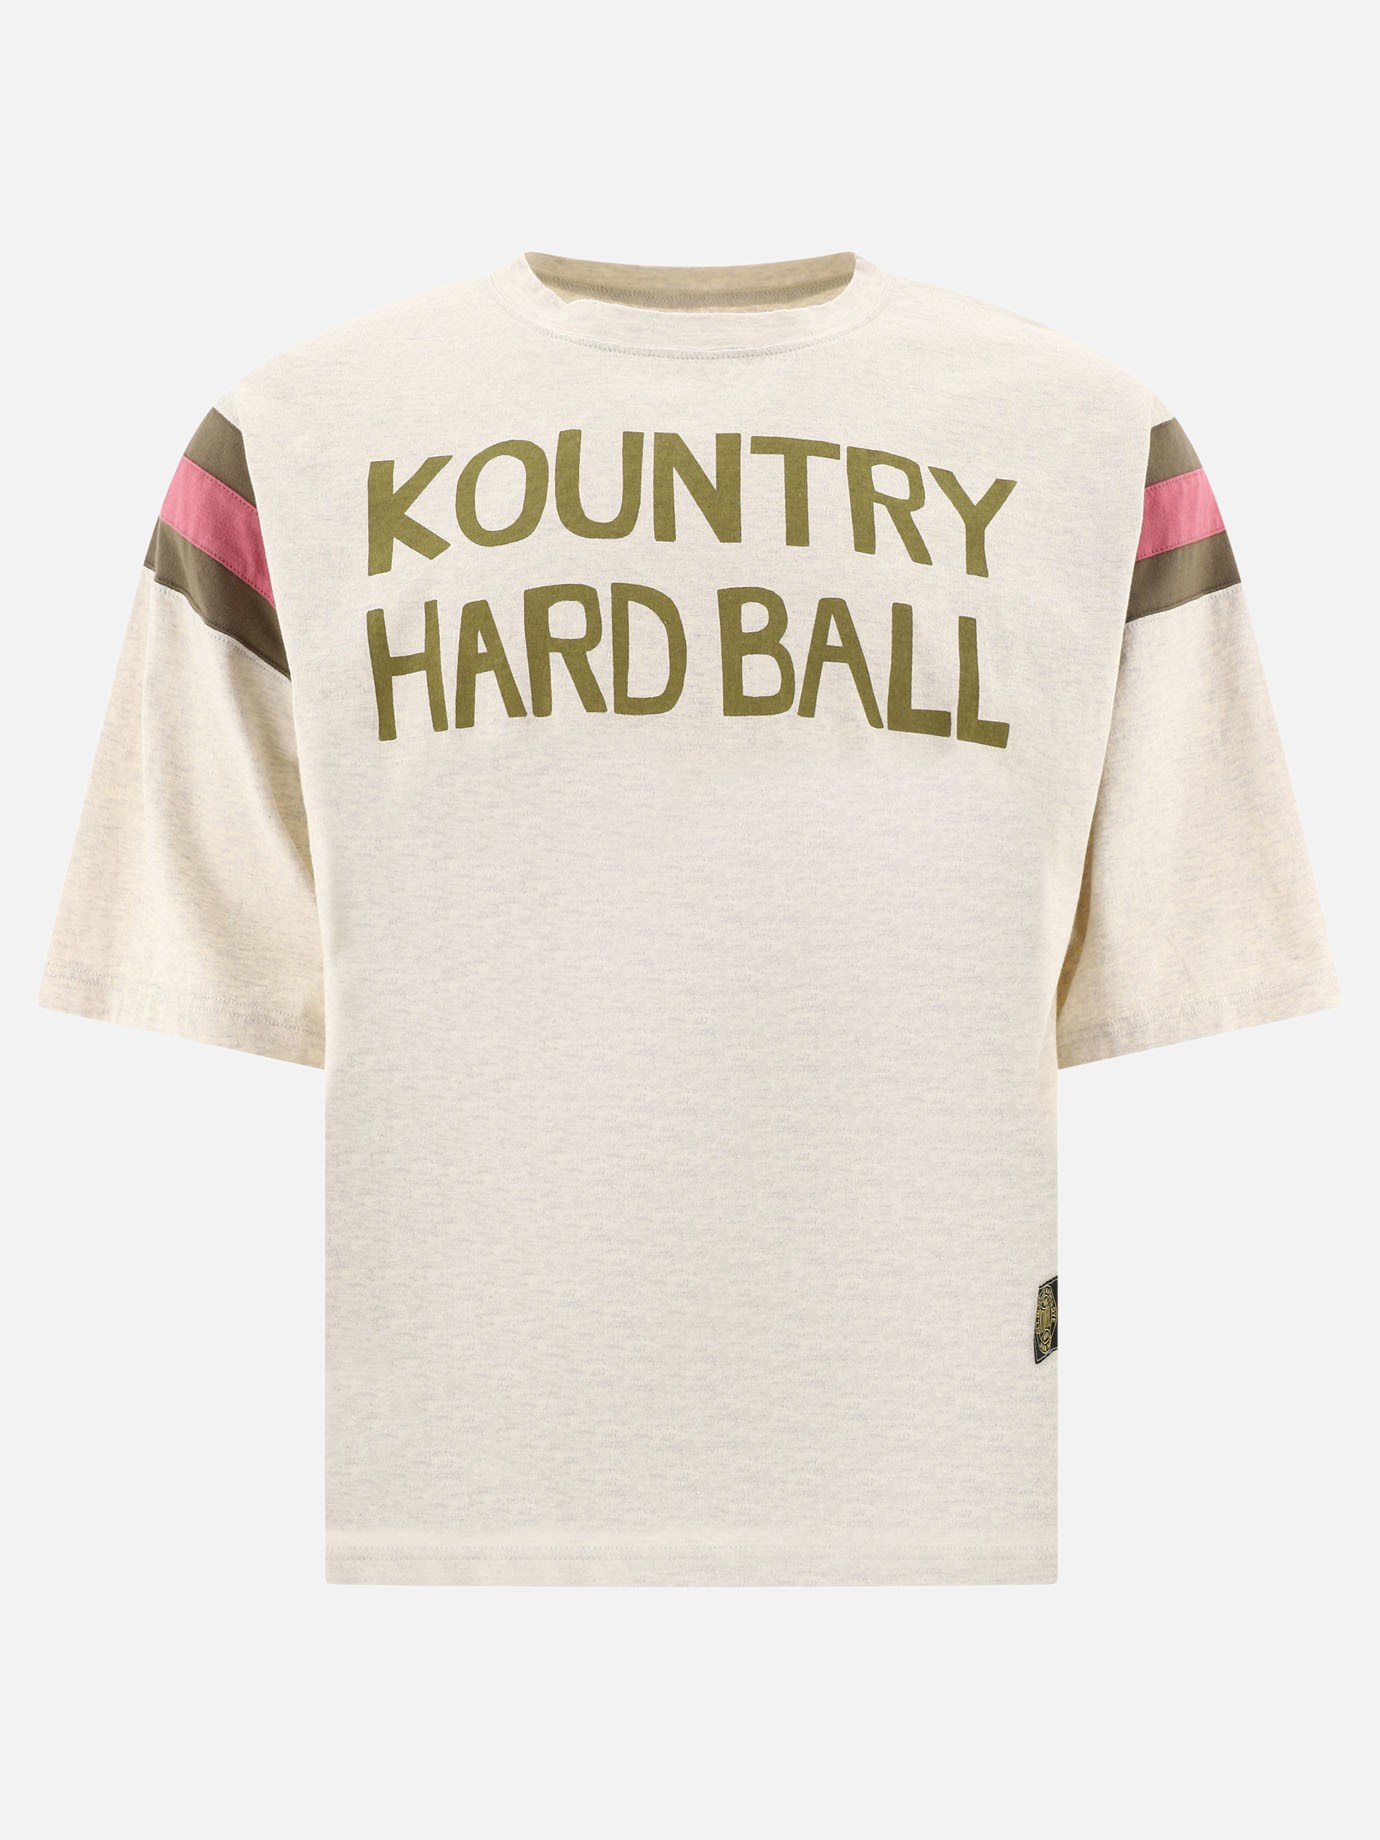 T-shirt  Kountry Hardball  by Kapital